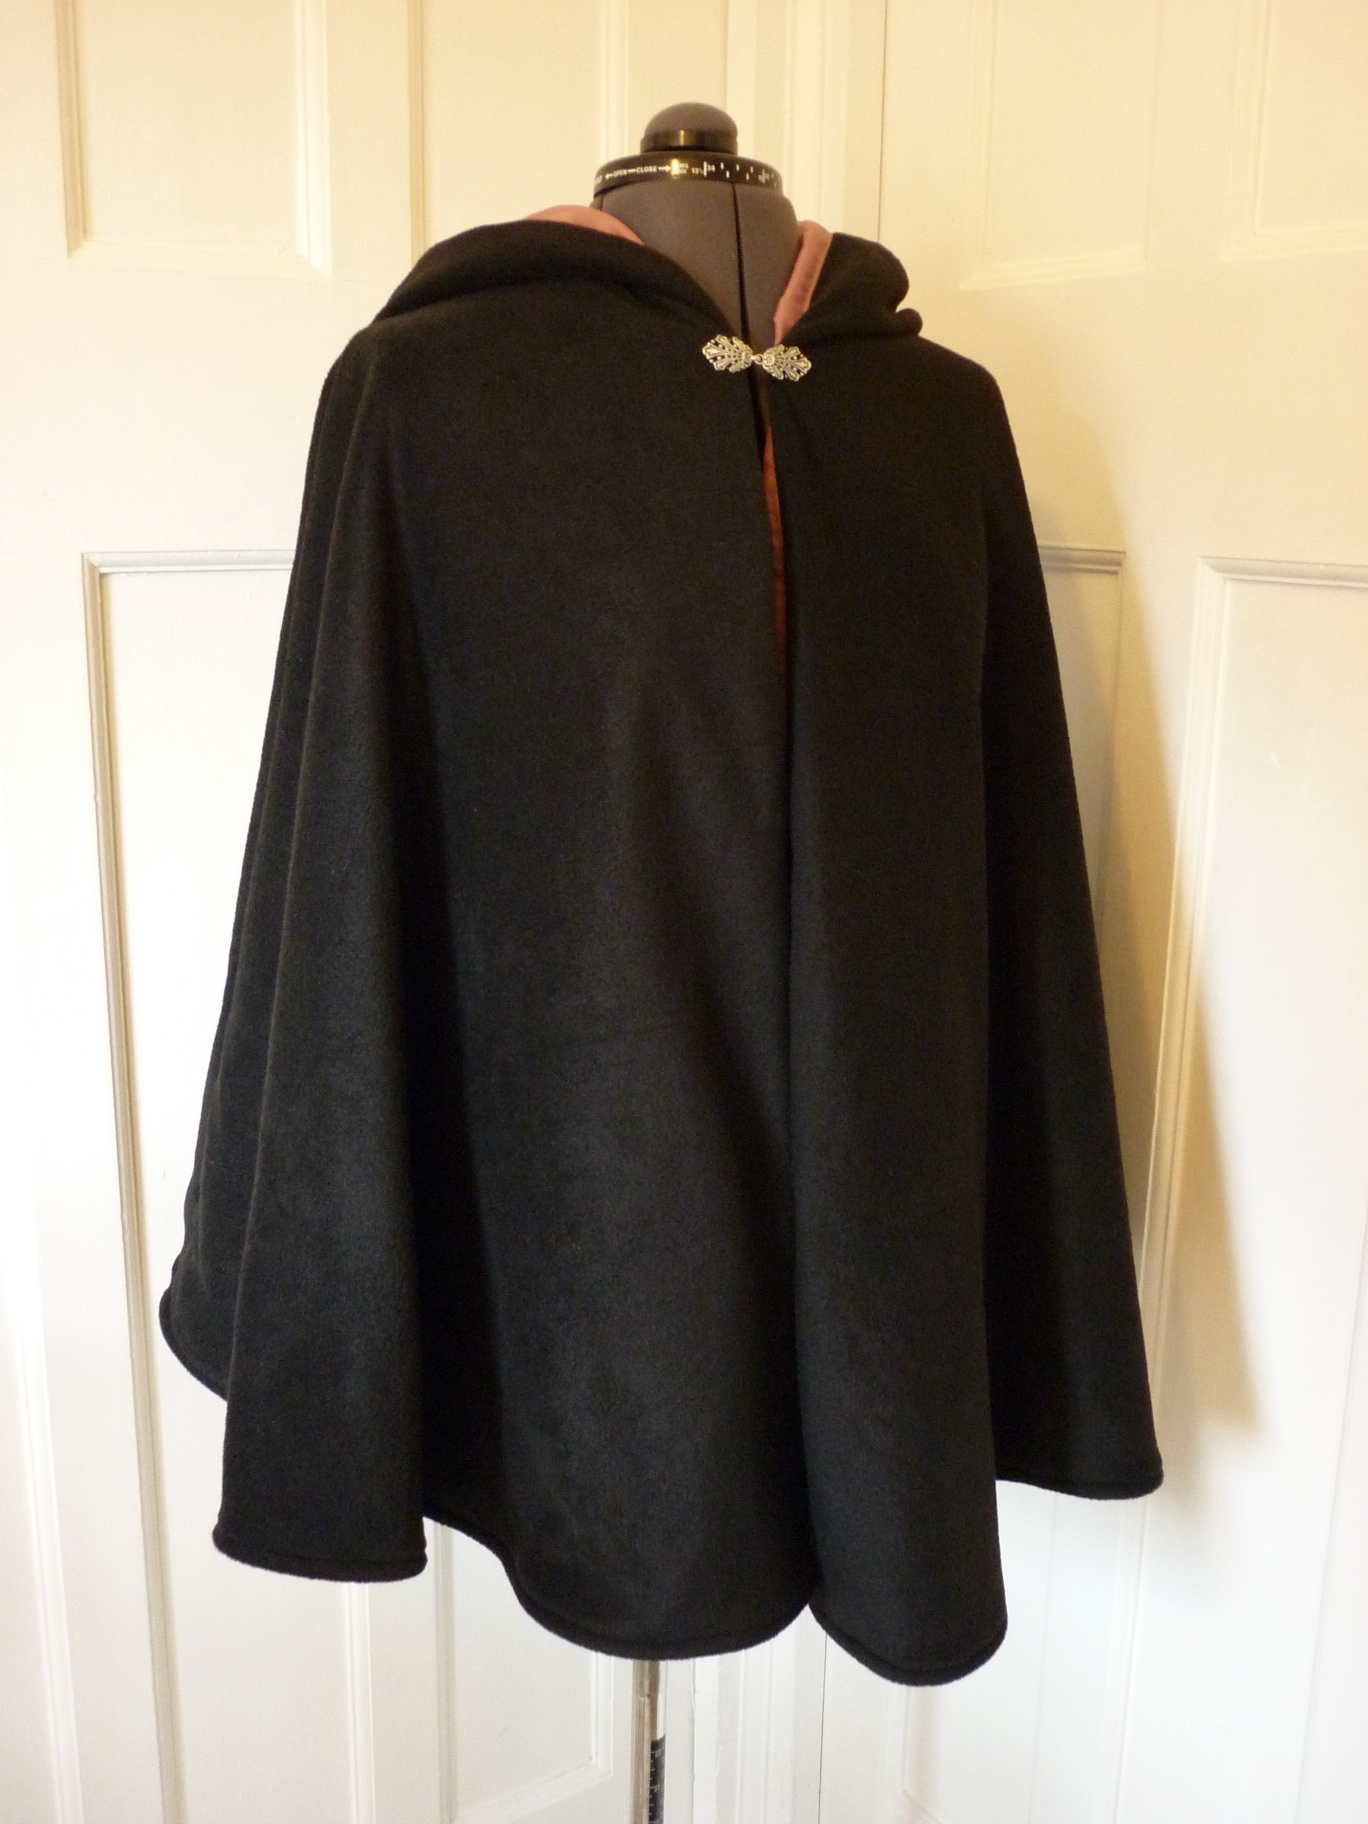 Capes & cloaks - bespoke - handmade in England - Rowan Tree Designs